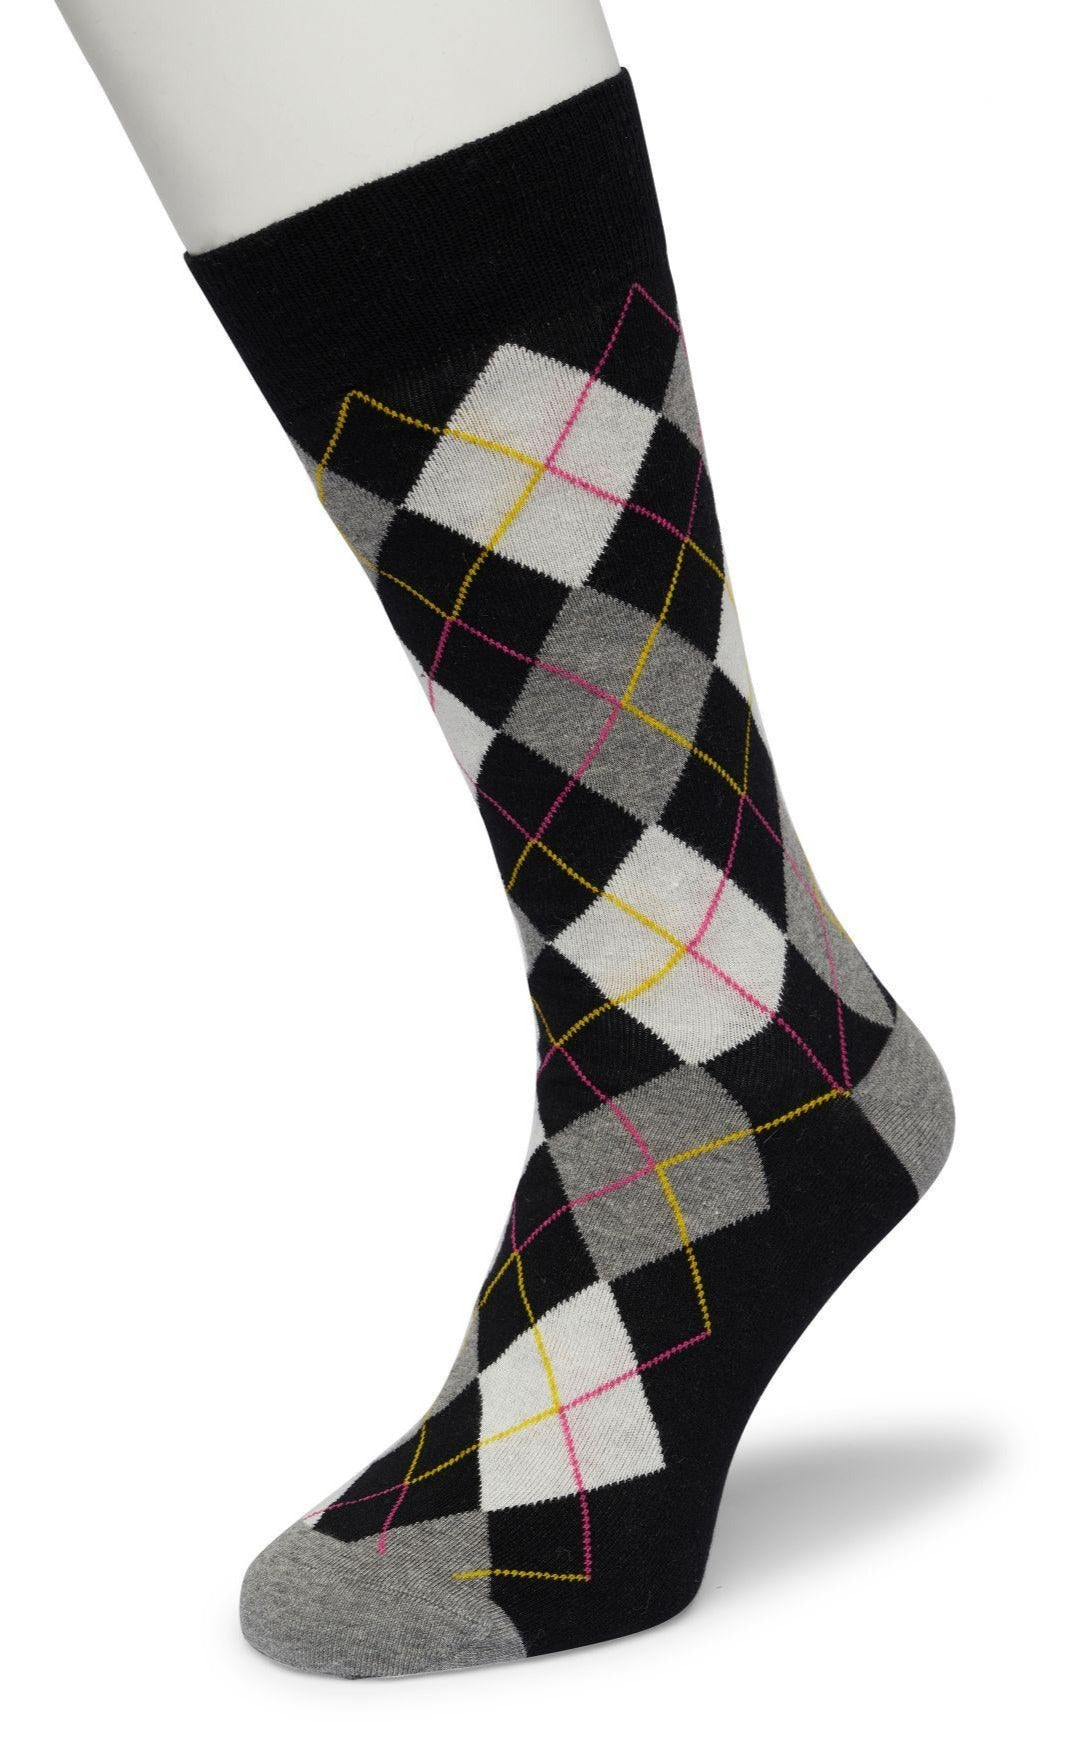 Bonnie Doon BP211122 Argyle Sock - Black, grey, yellow and pink cotton ankle socks with a golf style diamond argyle tartan check pattern.